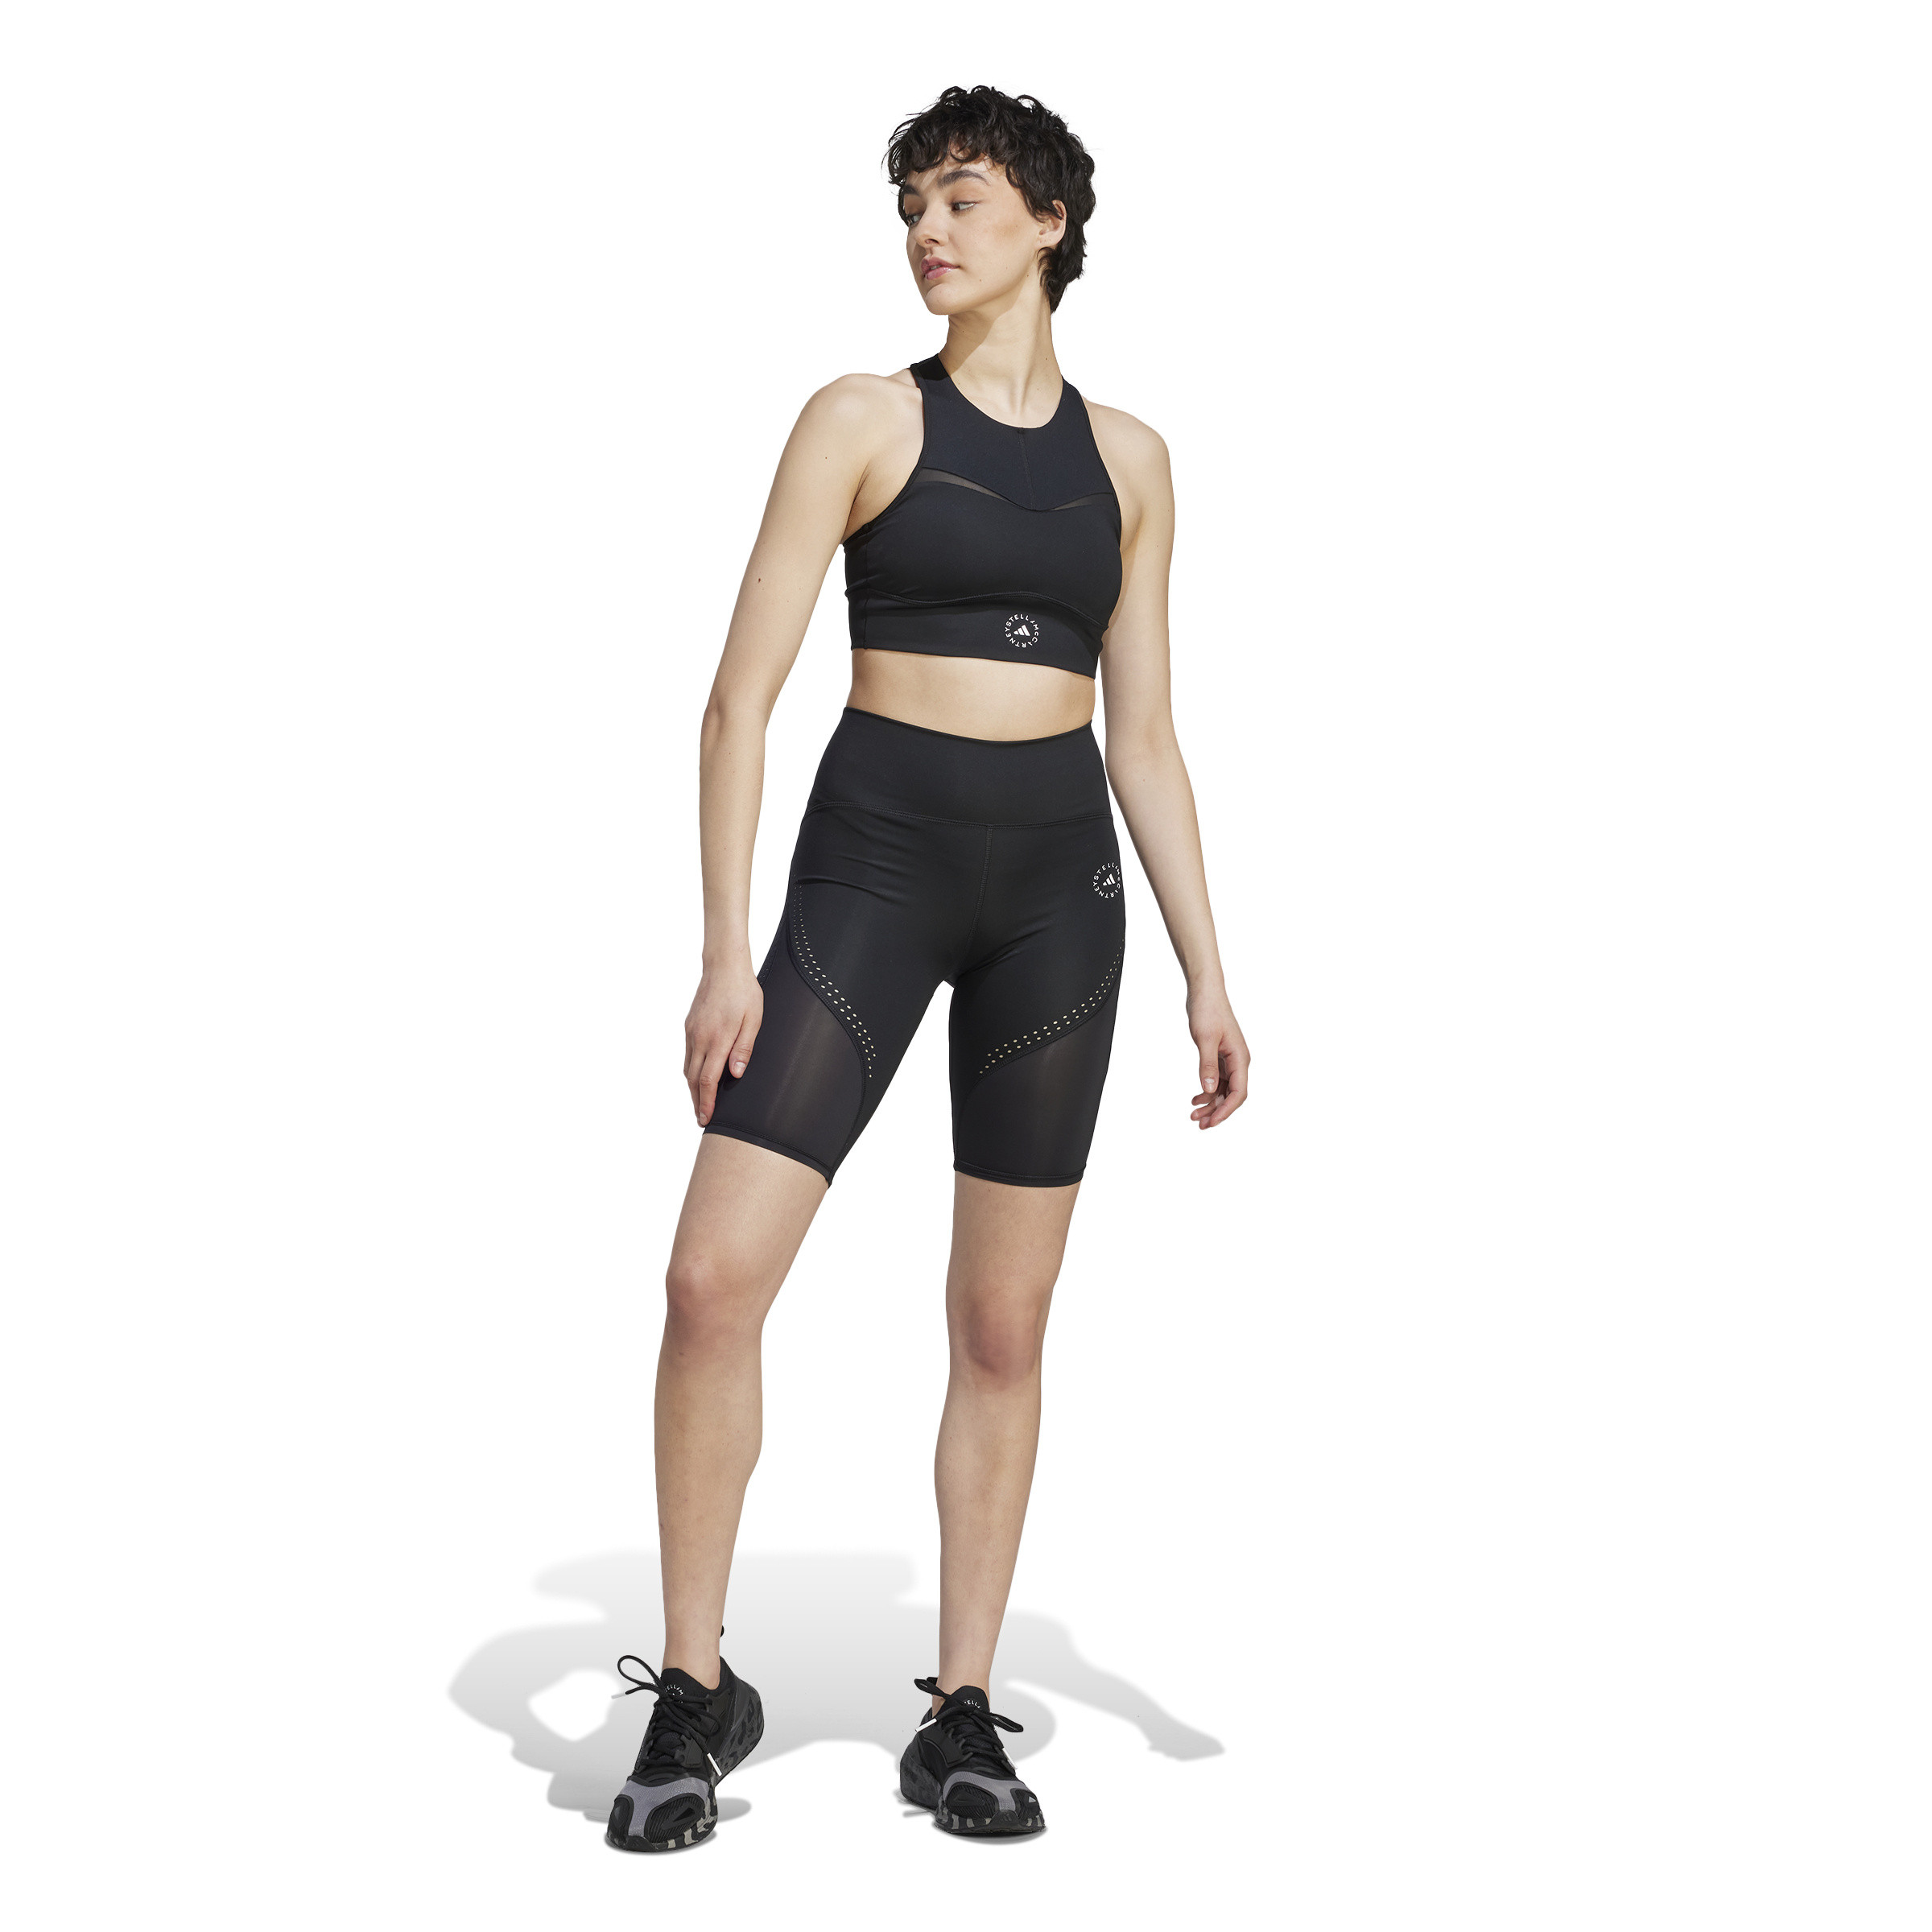 Adidas by Stella McCartney - TruePurpose Optime Bike Training Leggings, Black, large image number 4